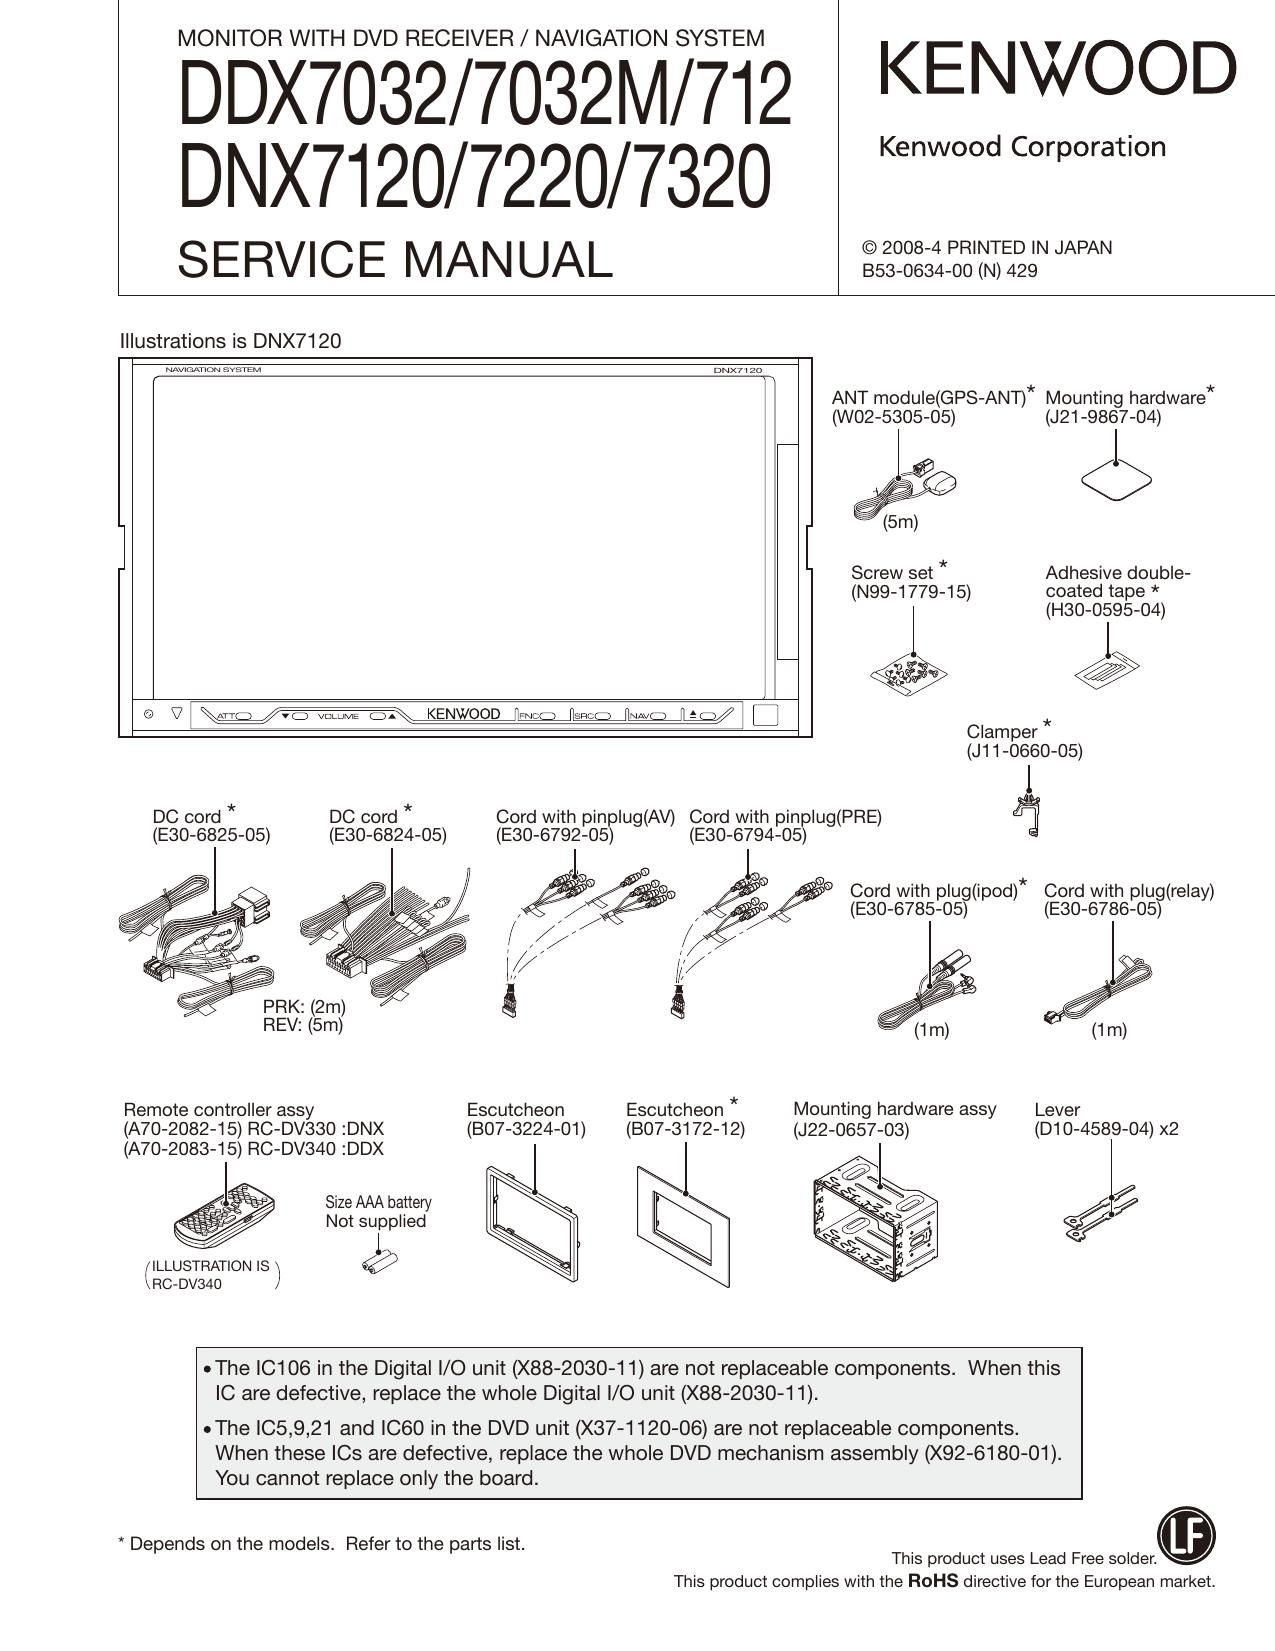 Kenwood DDX 712 HU Service Manual